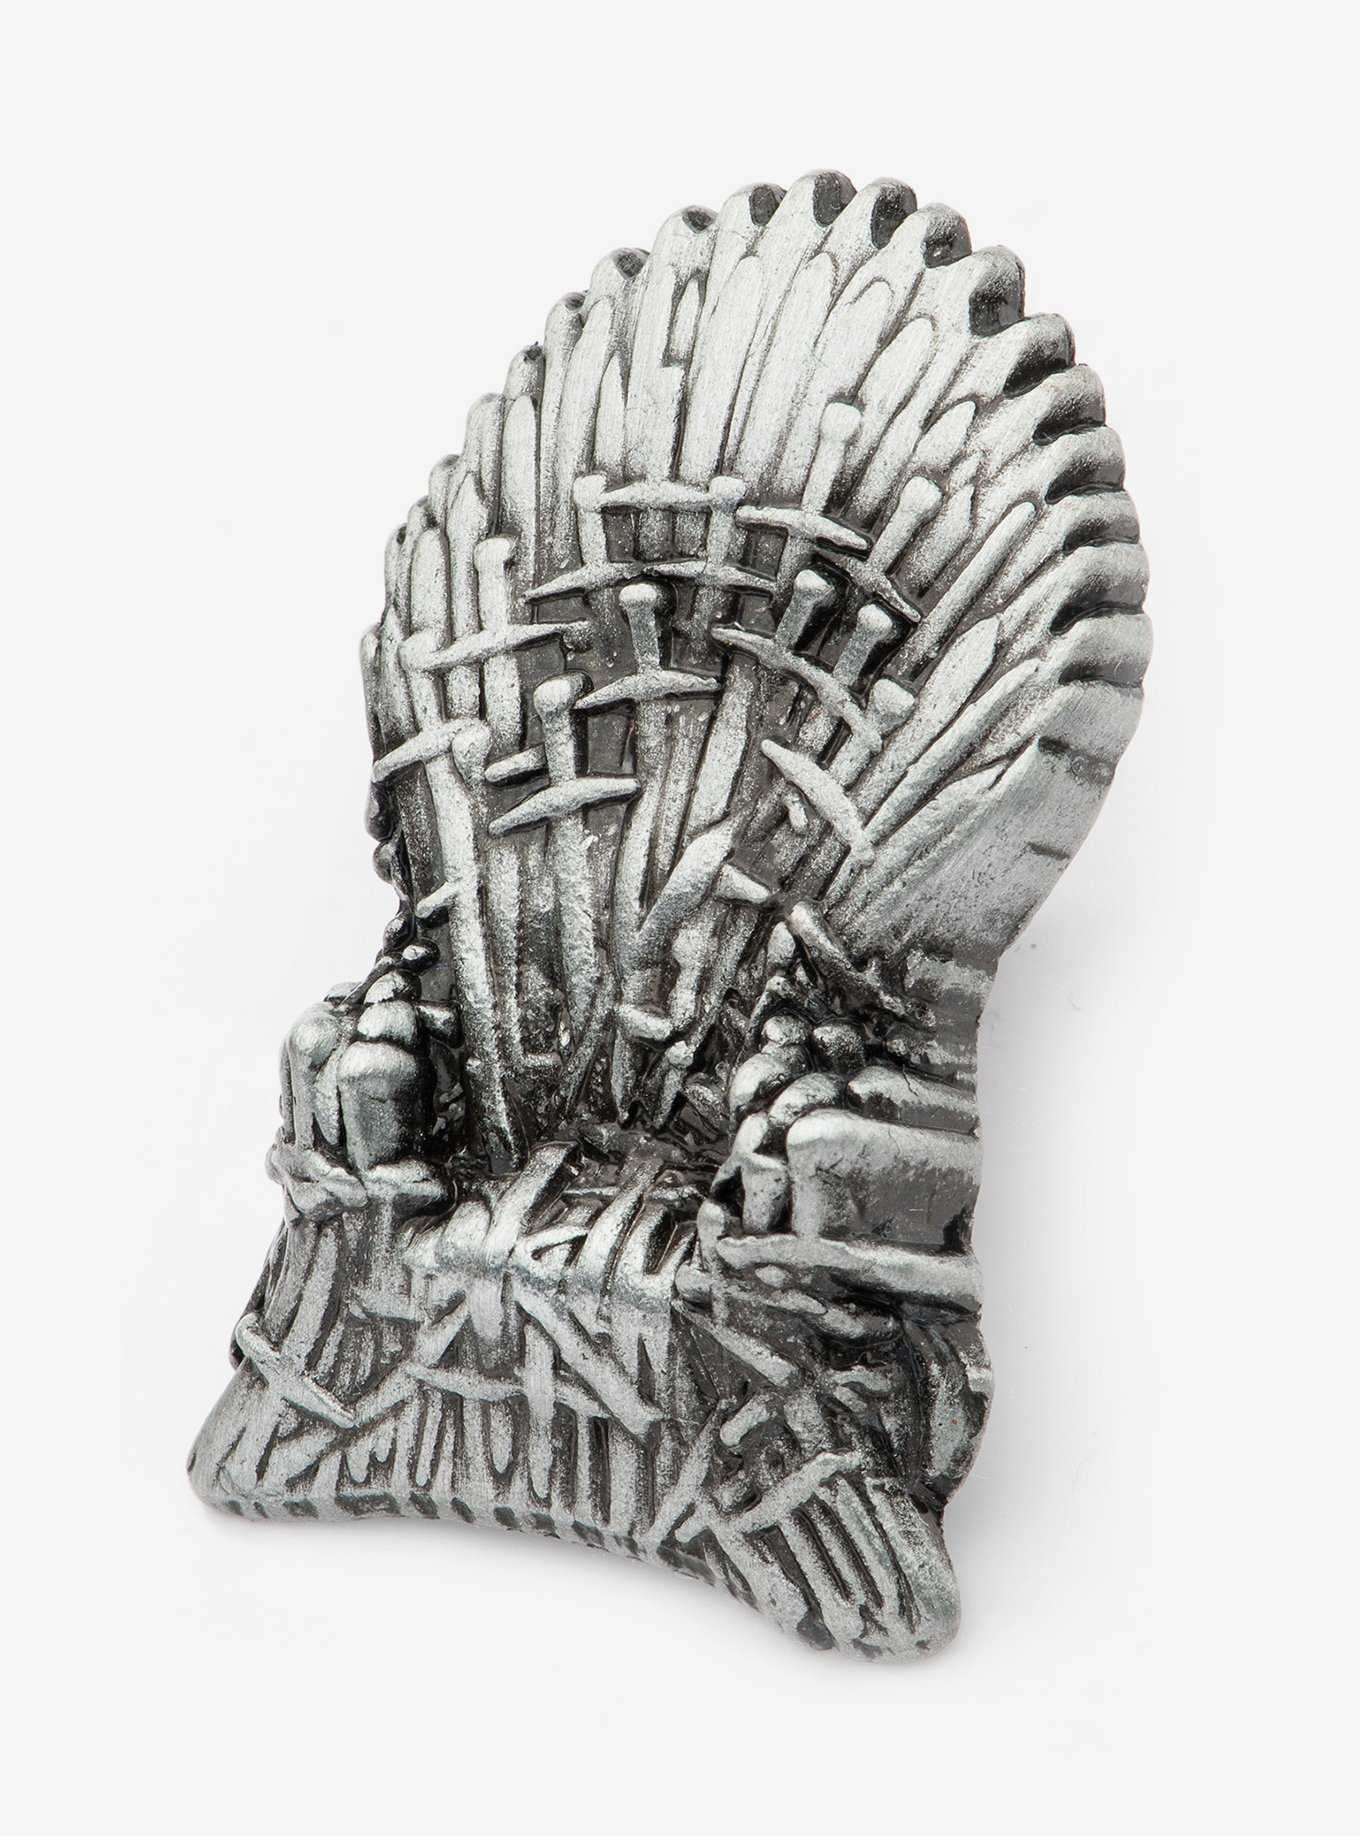 Game Of Thrones Iron Throne Lapel Pin, , hi-res